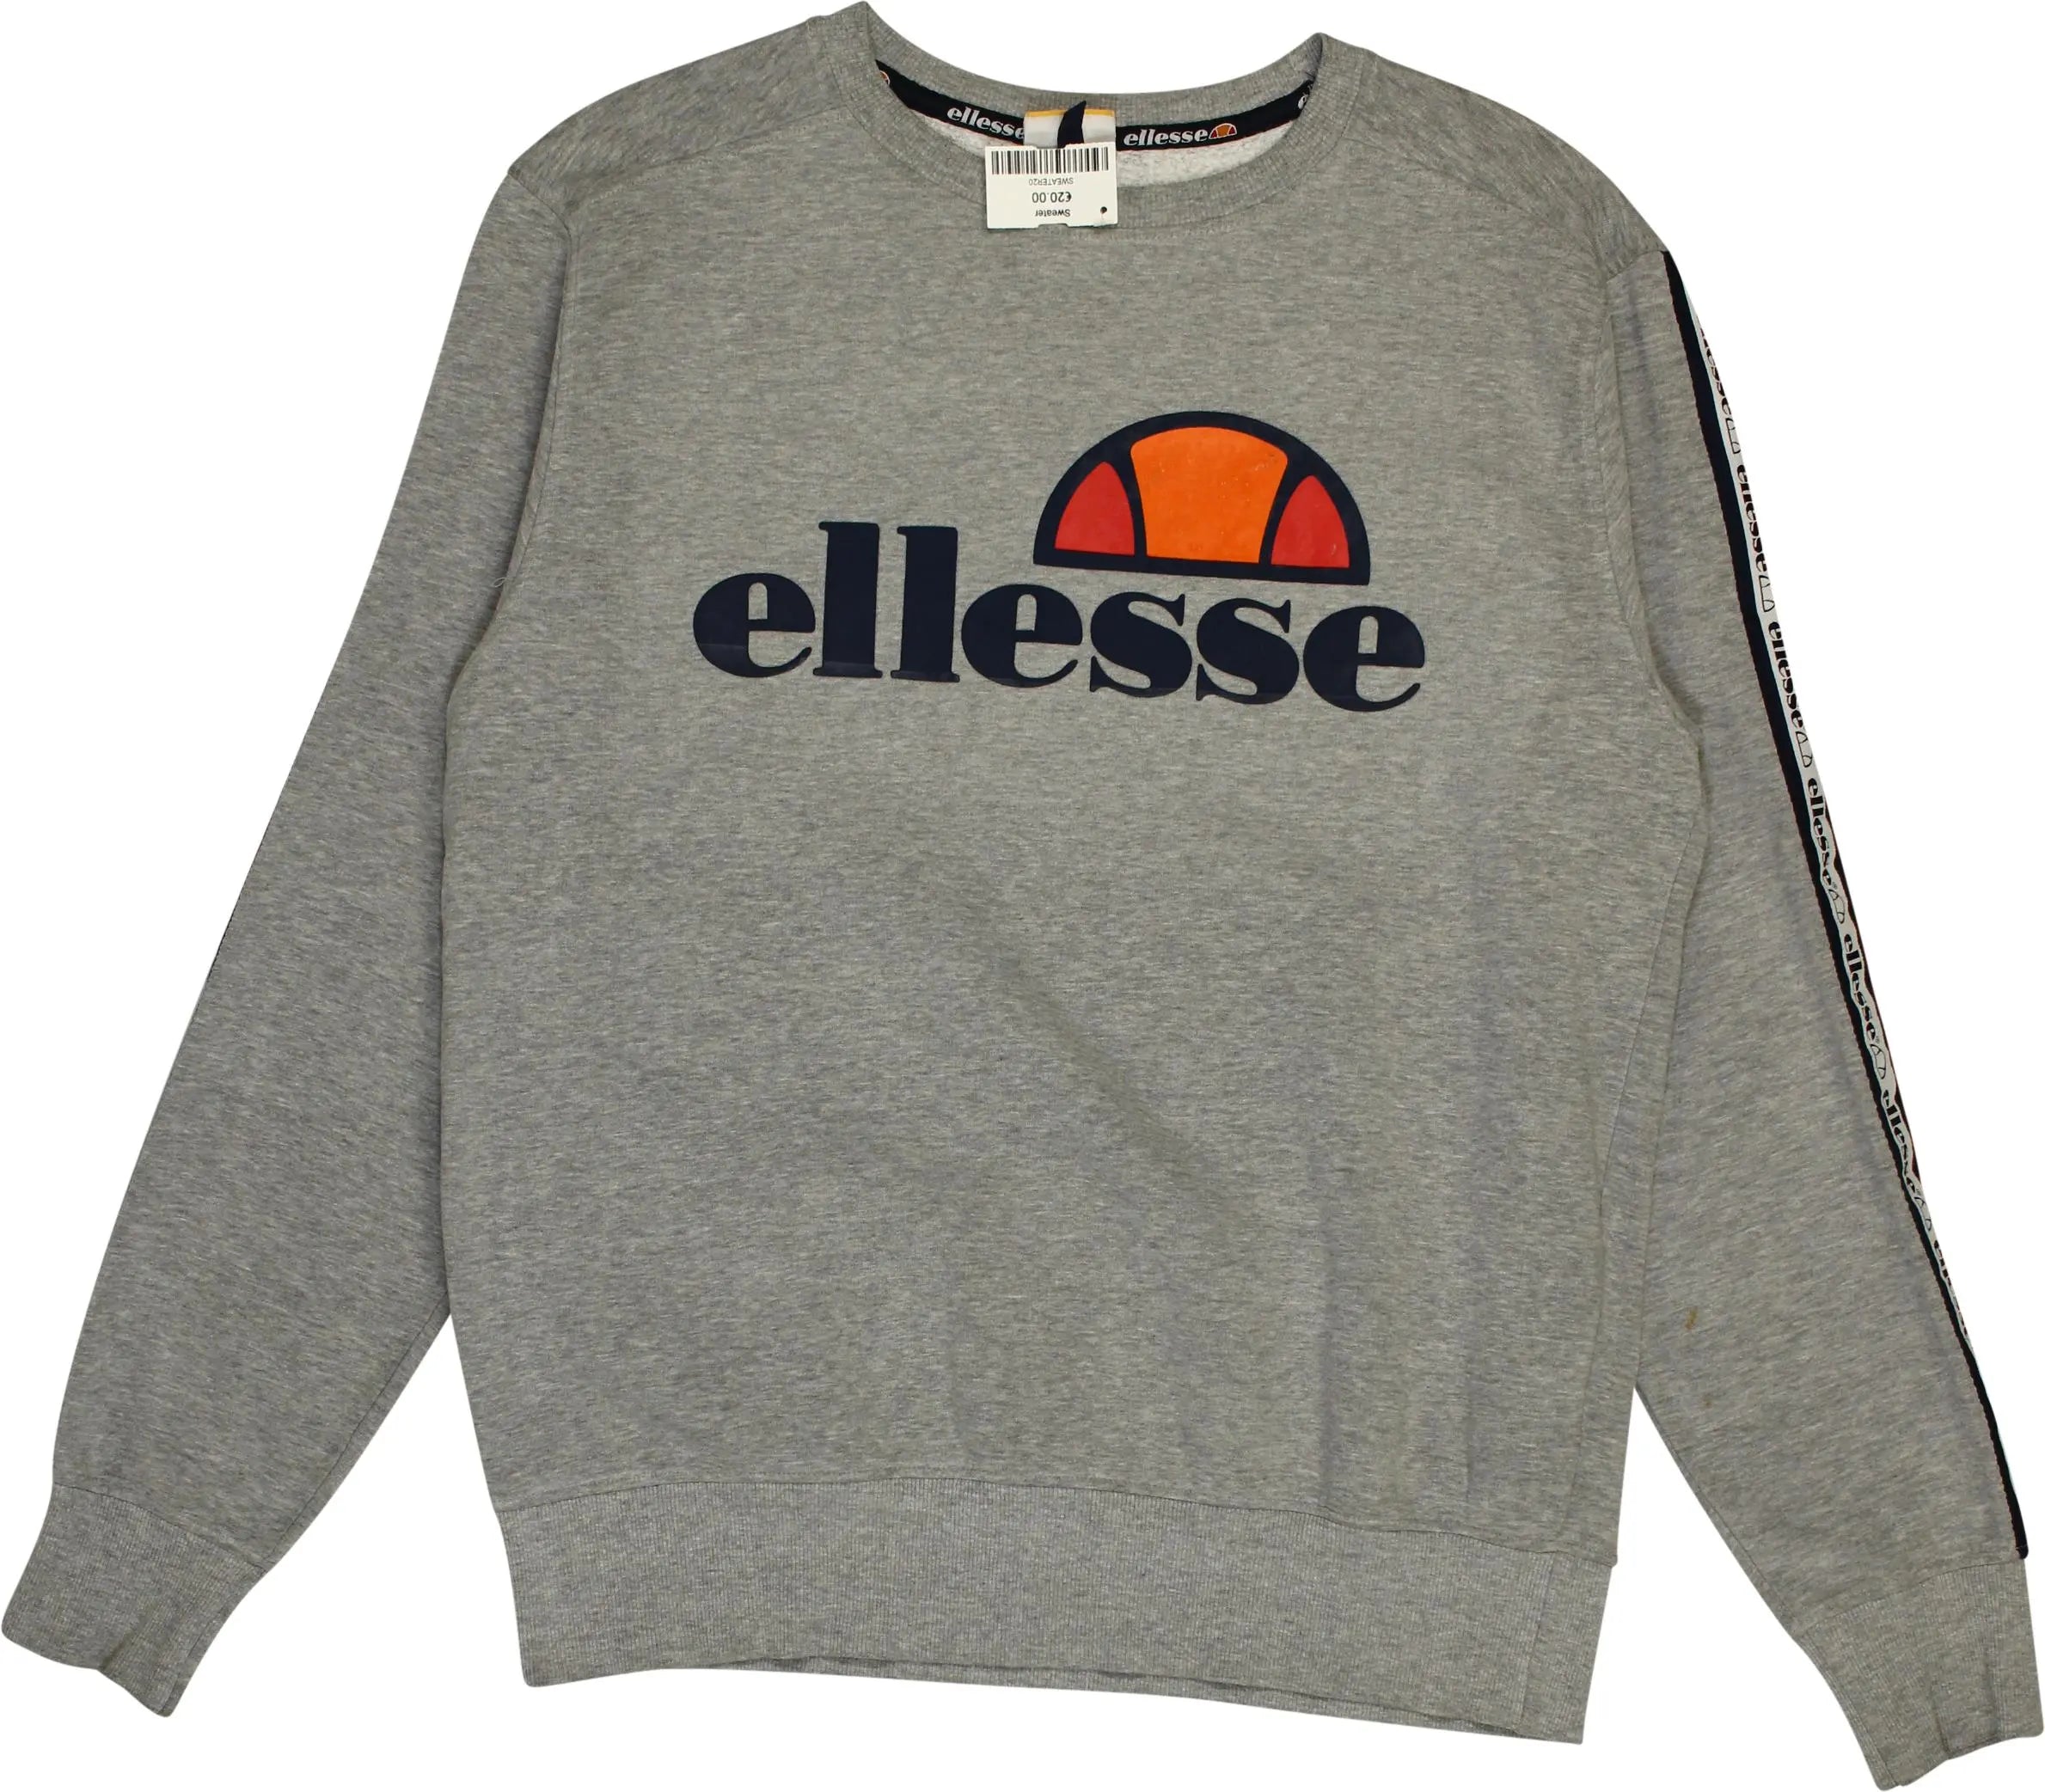 Ellesse - Ellesse Sweater- ThriftTale.com - Vintage and second handclothing